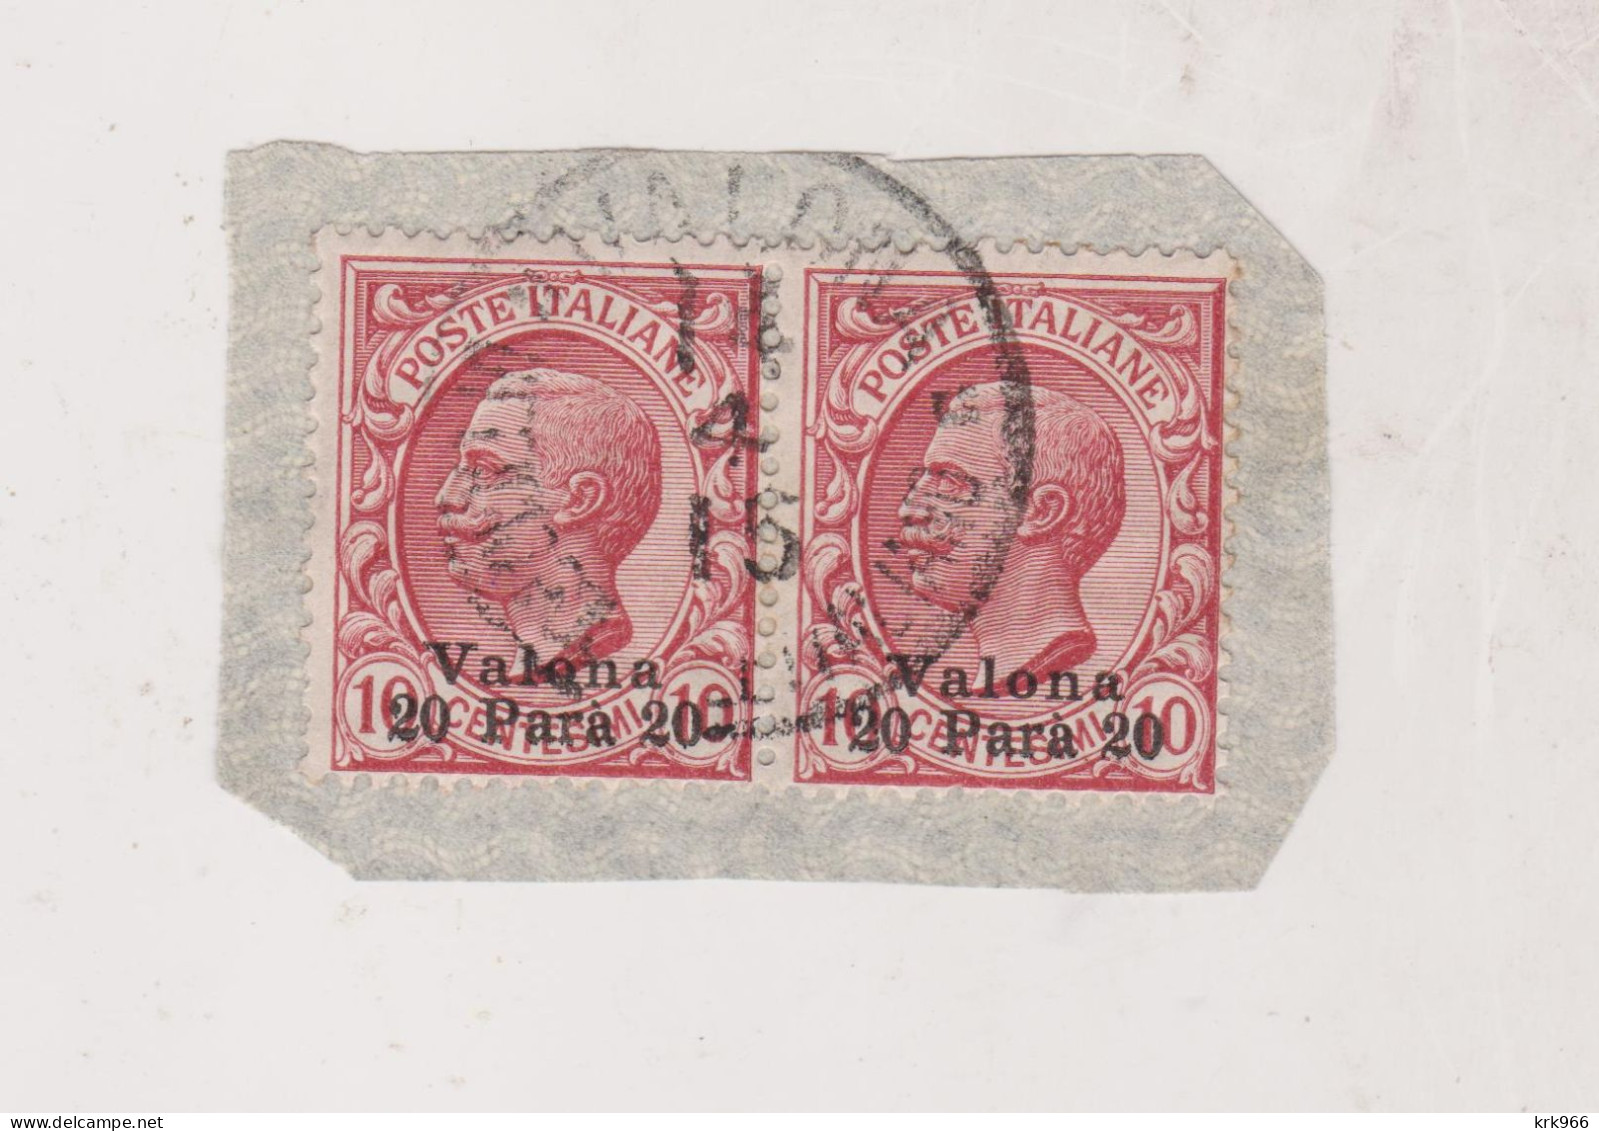 ITALY  ALBANIA VALONA Nice Stamps Used On Piece - Albanië